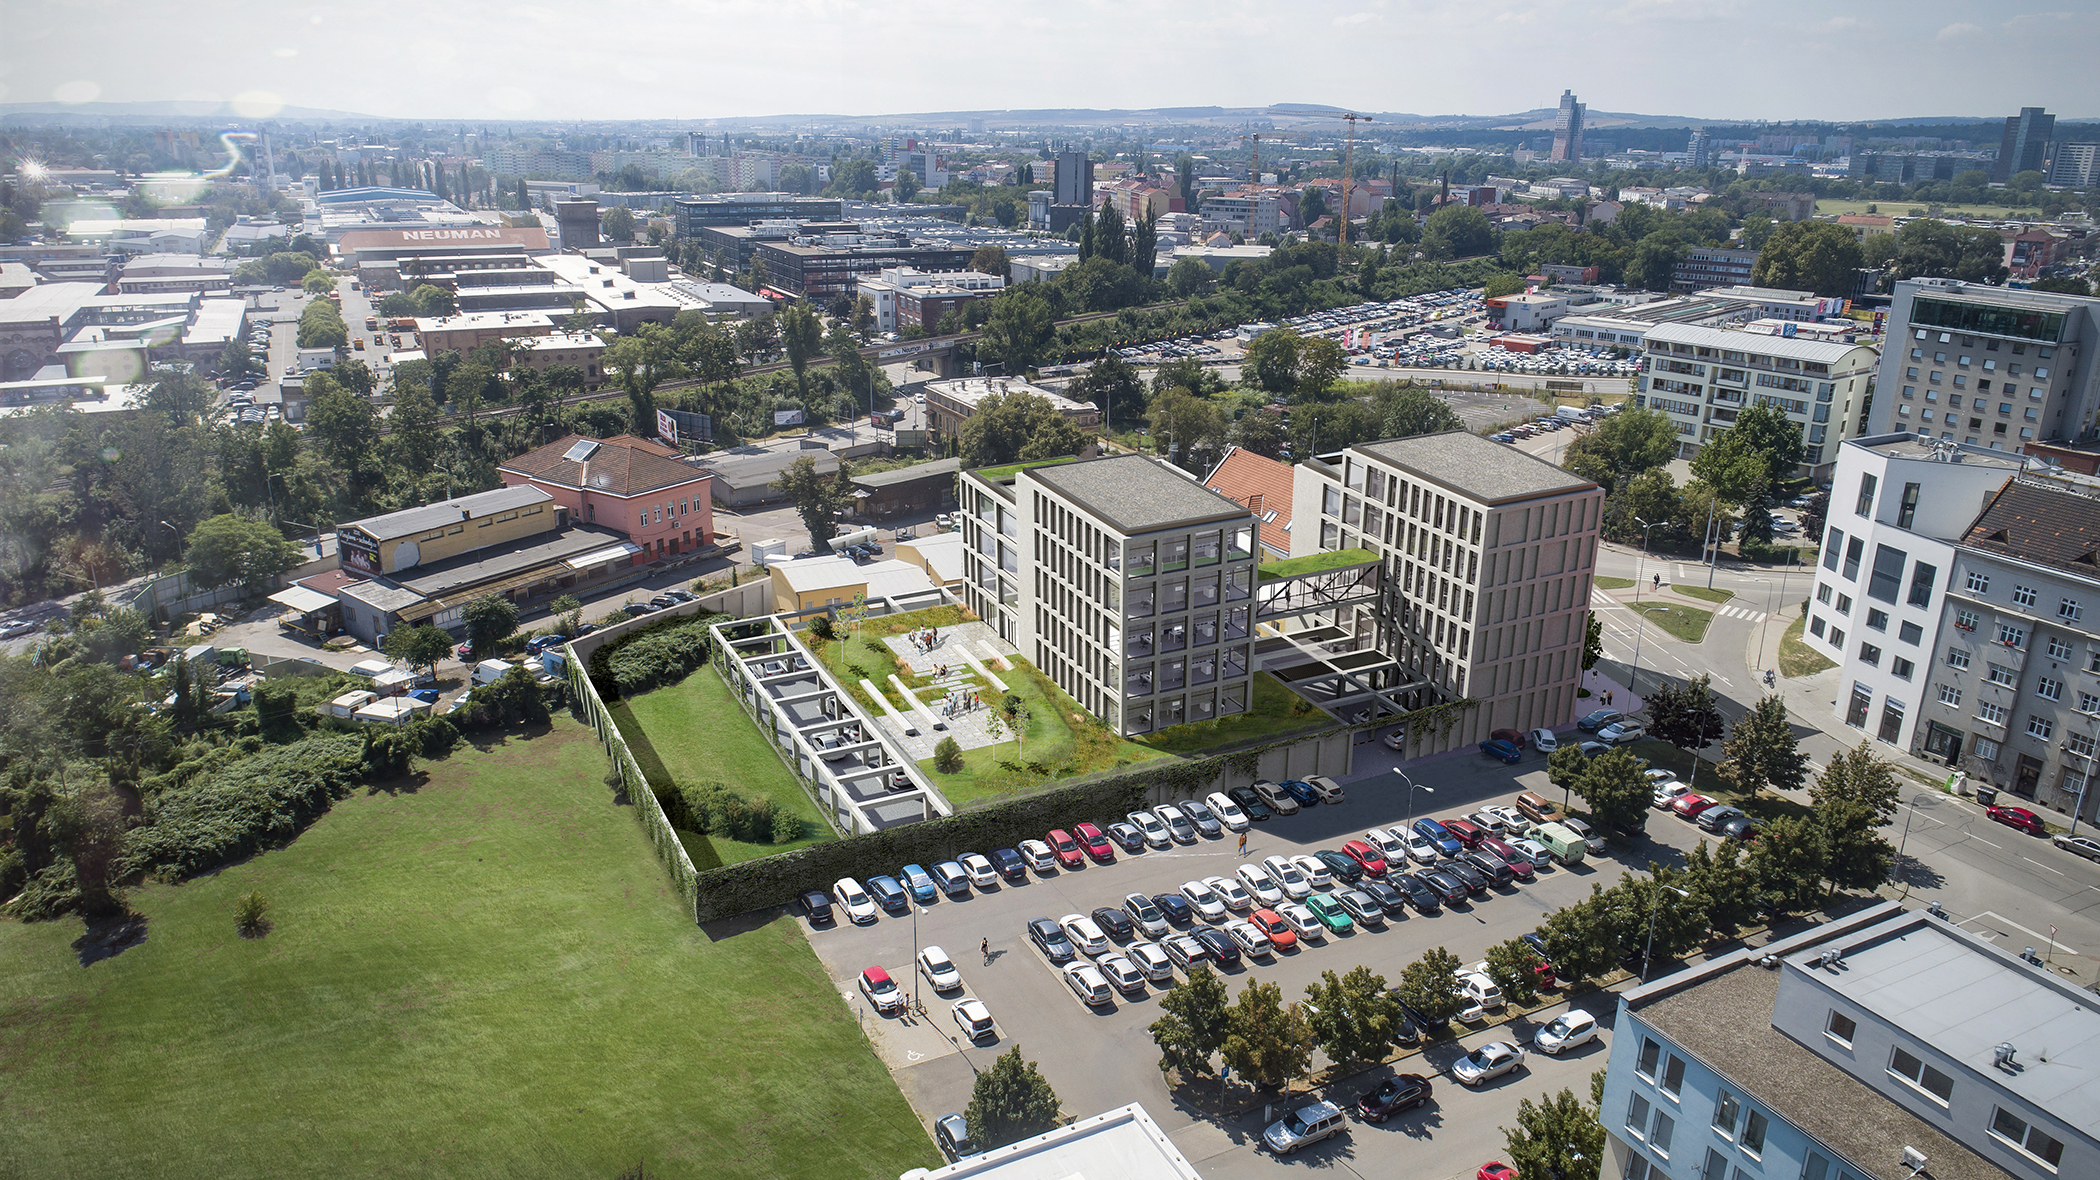 Administrative building KHS-JMK, Brnow project